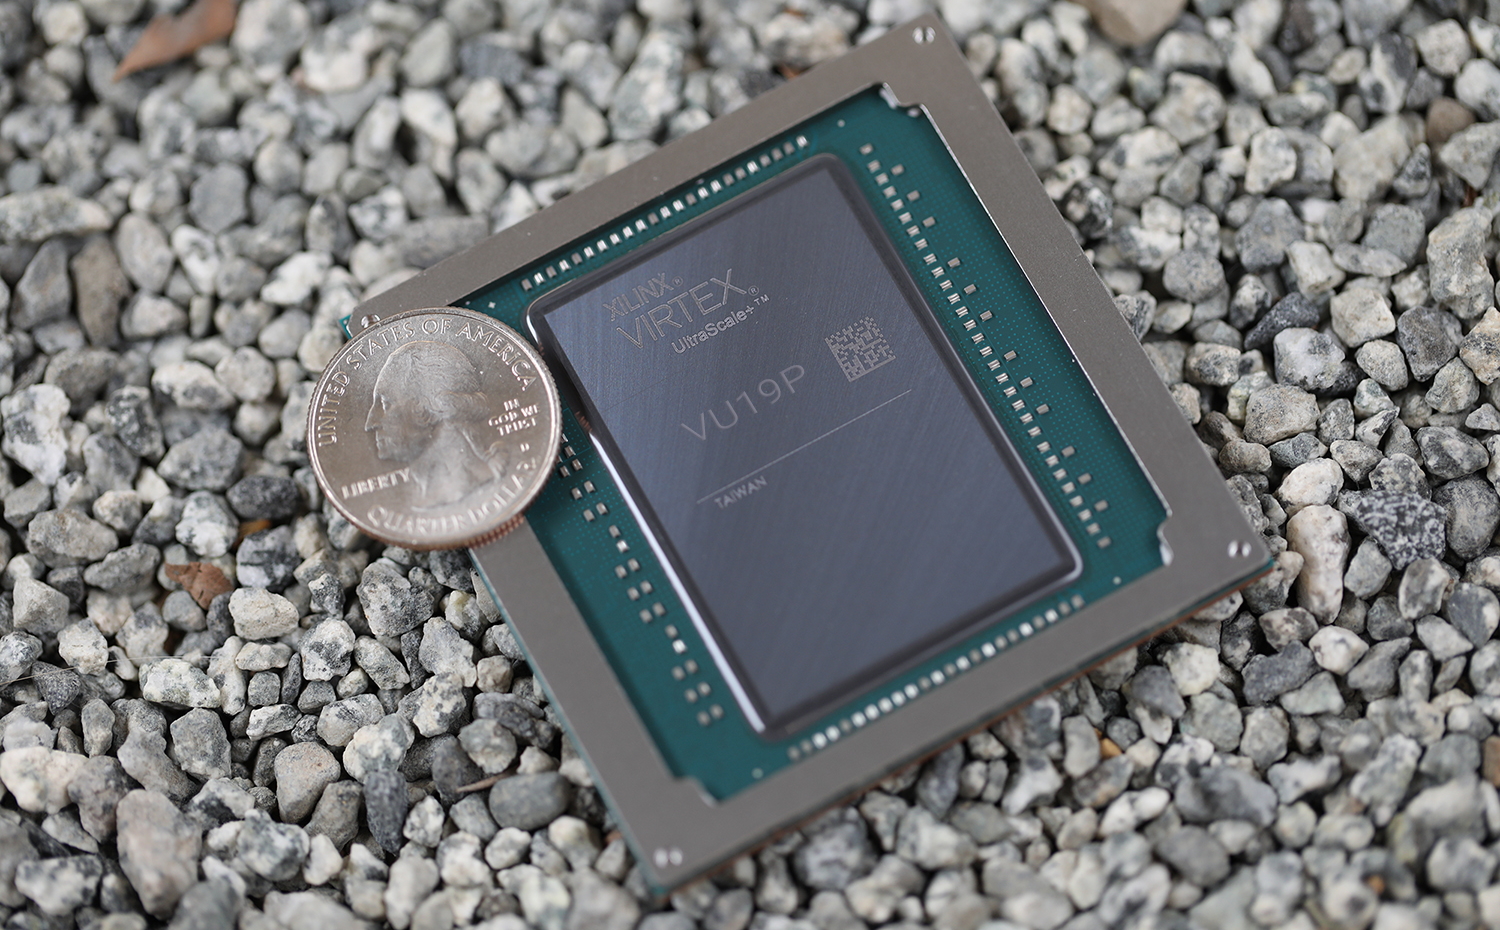 Xilinx’s New FPGA has the Highest Logic Density of Any Single Device Ever Made